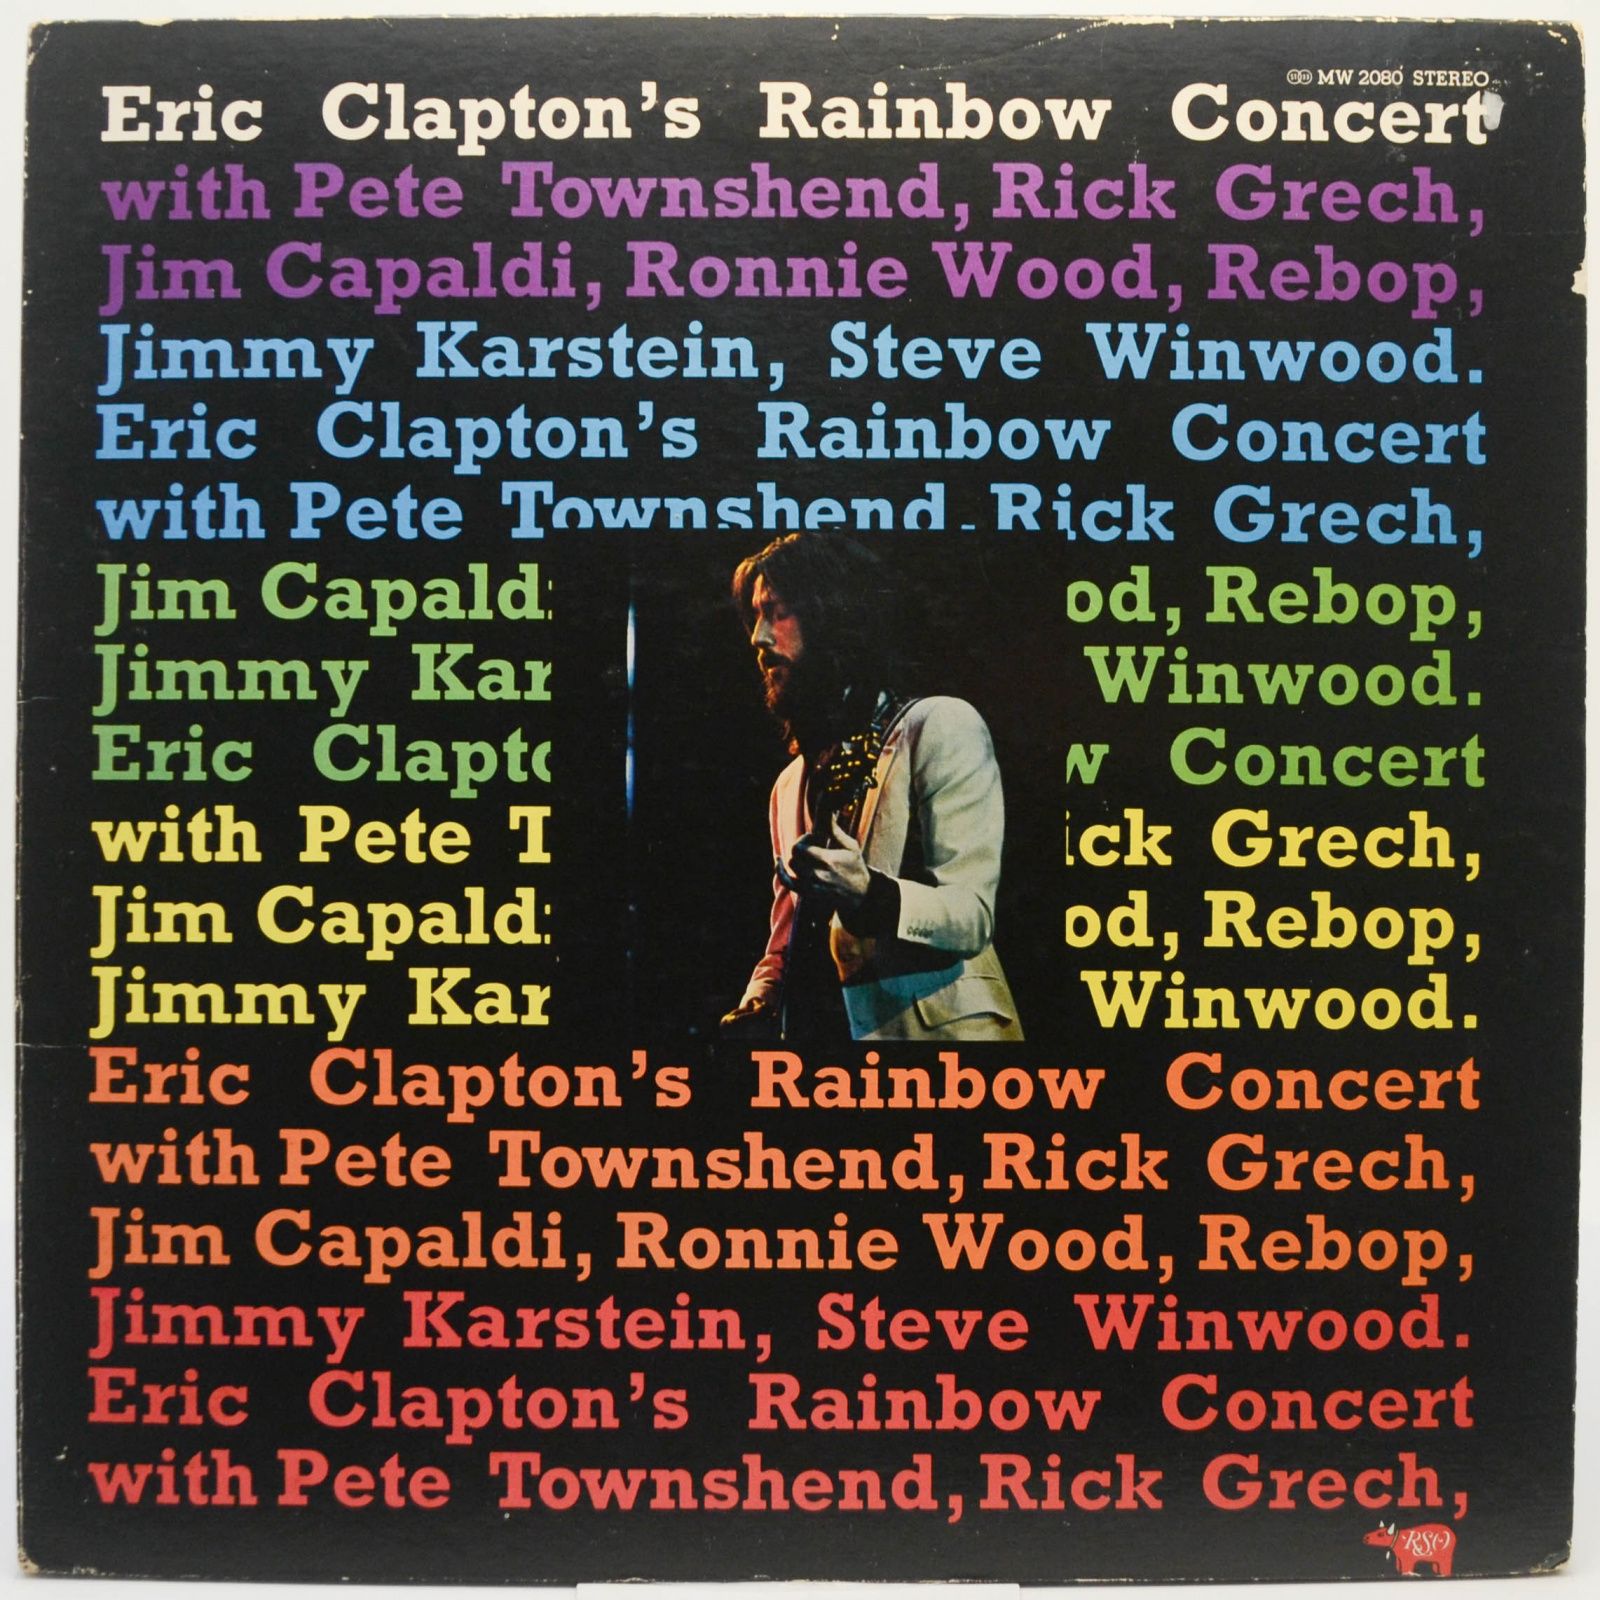 Eric Clapton's Rainbow Concert, 1973